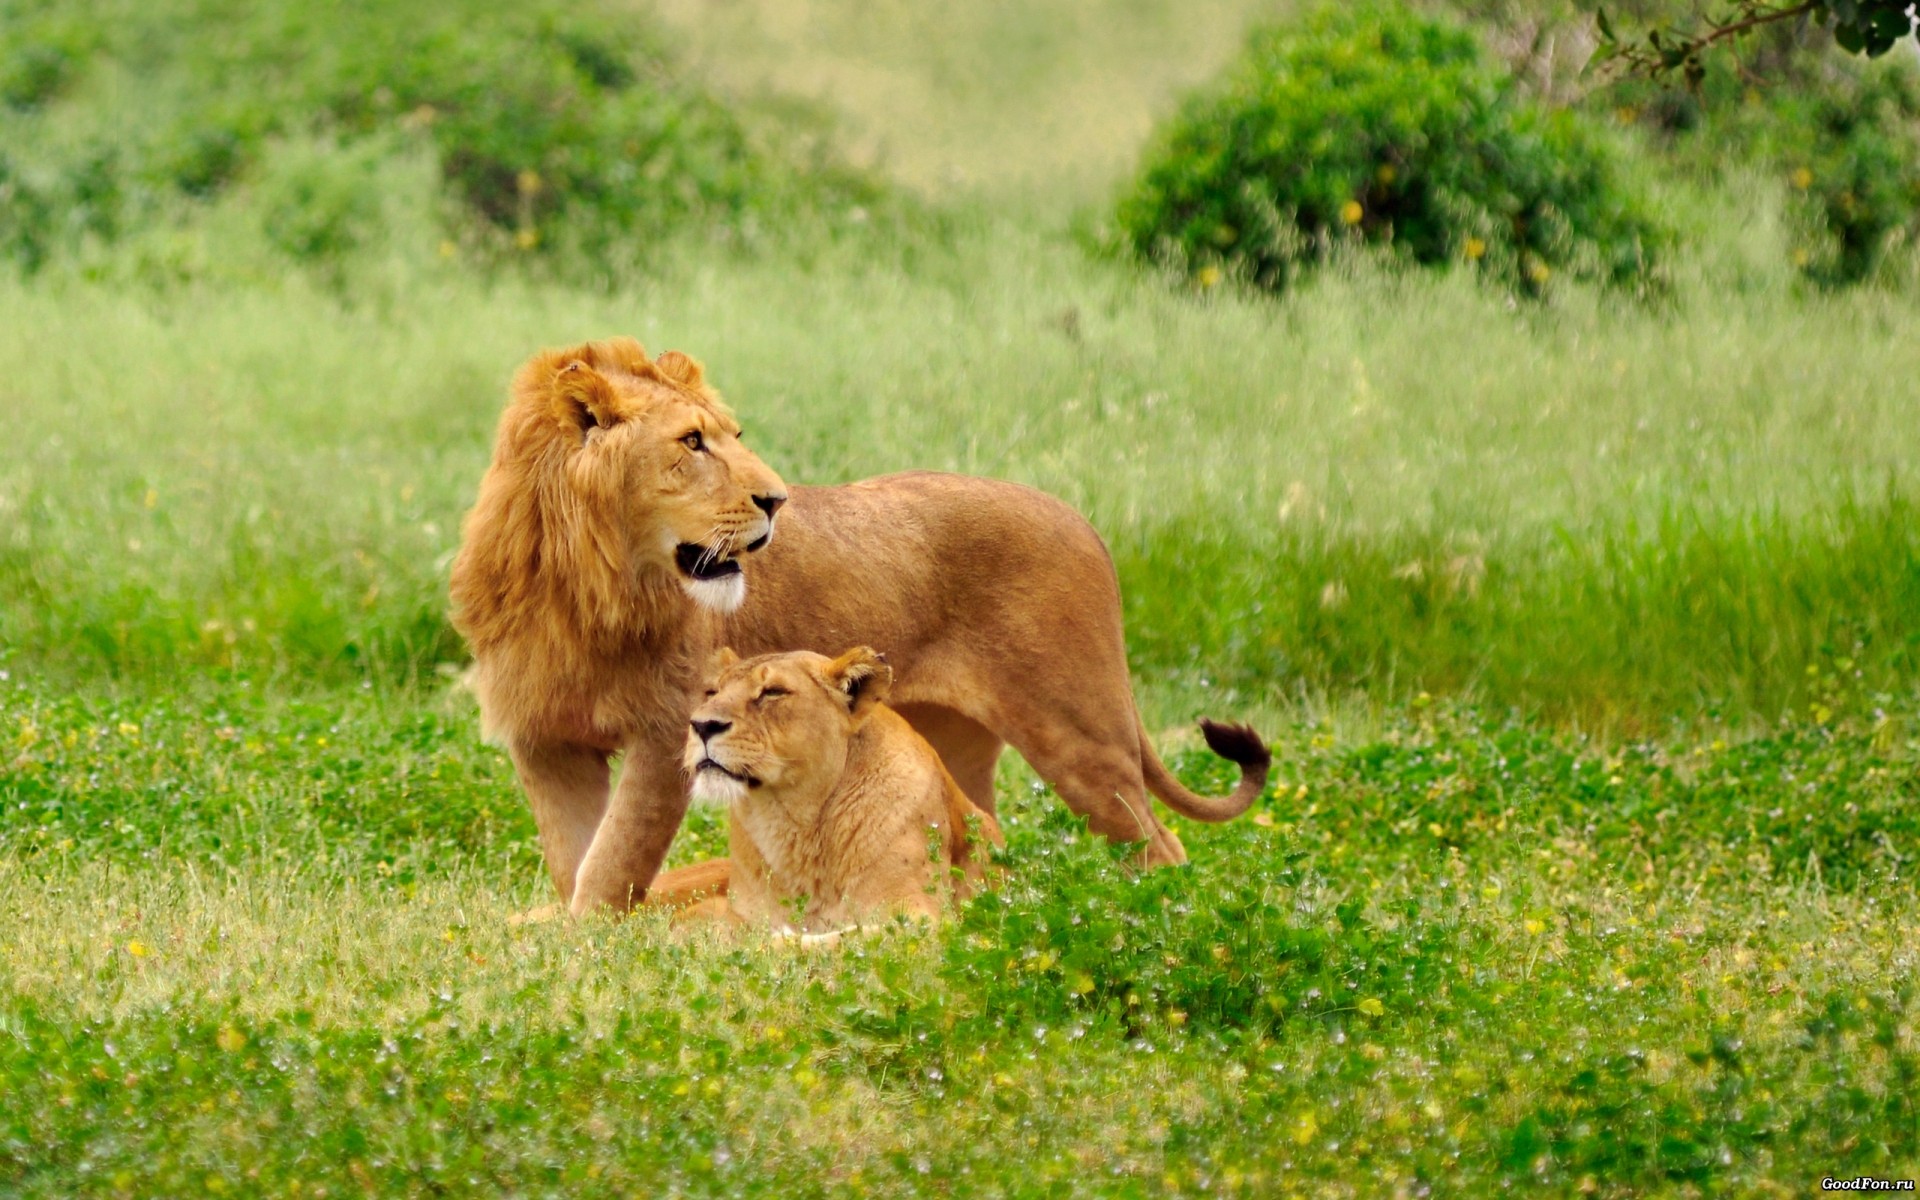 animals mammal grass animal wildlife nature lion wild cat fur predator cute park field lions